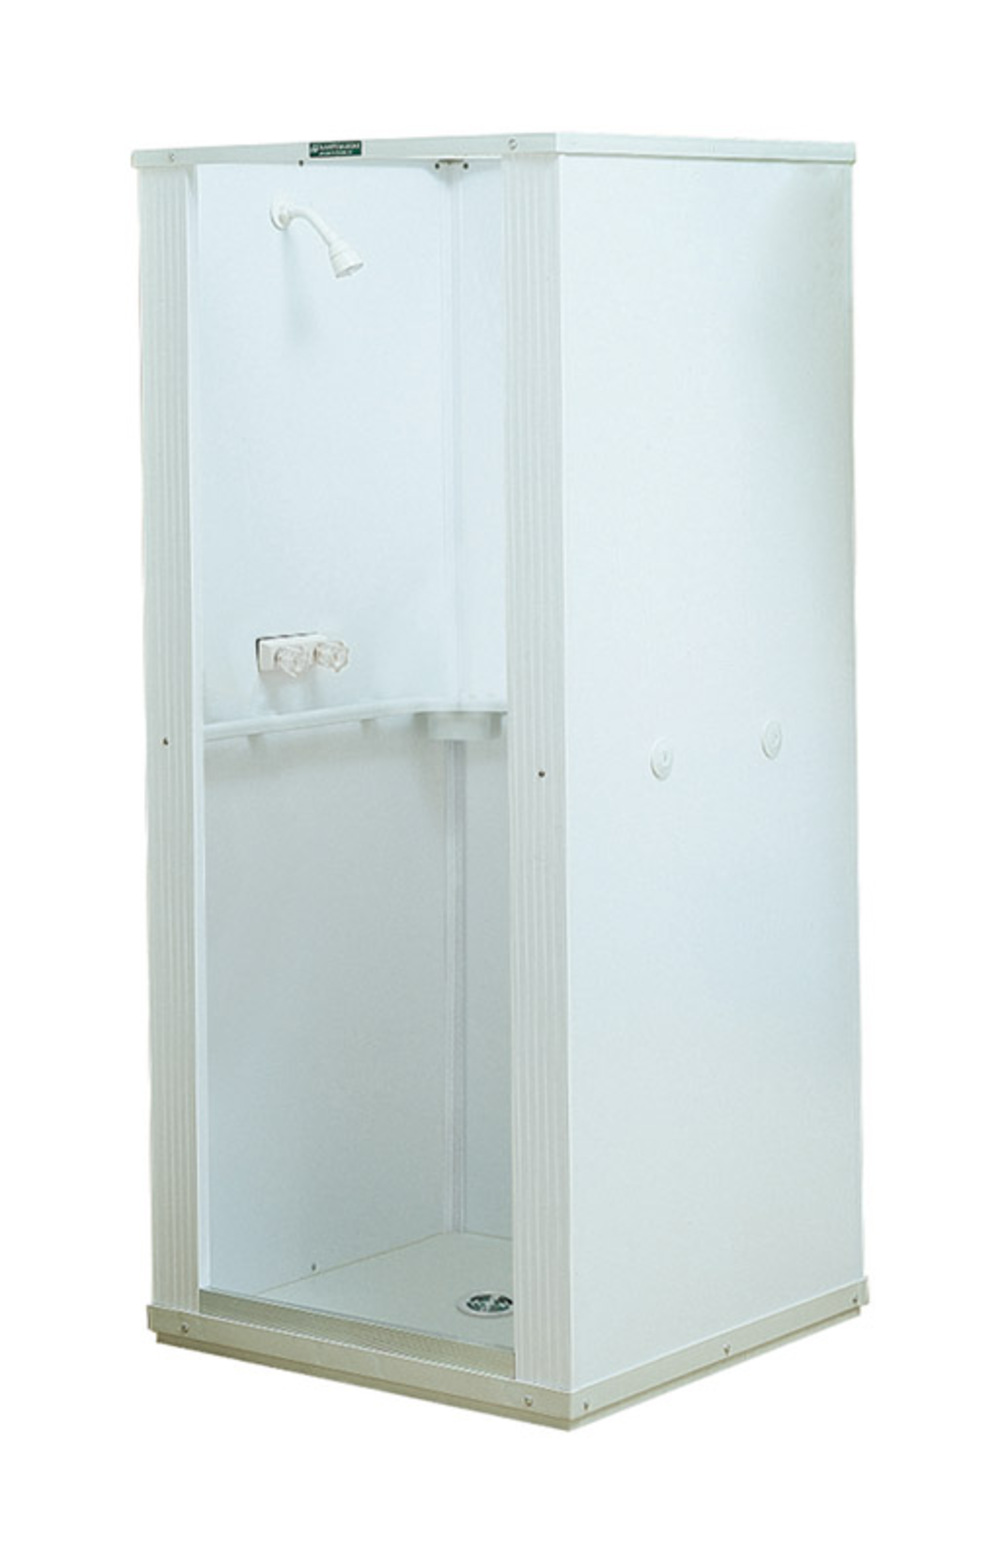 Mustee Durastall Shower Stall - image 1 of 1